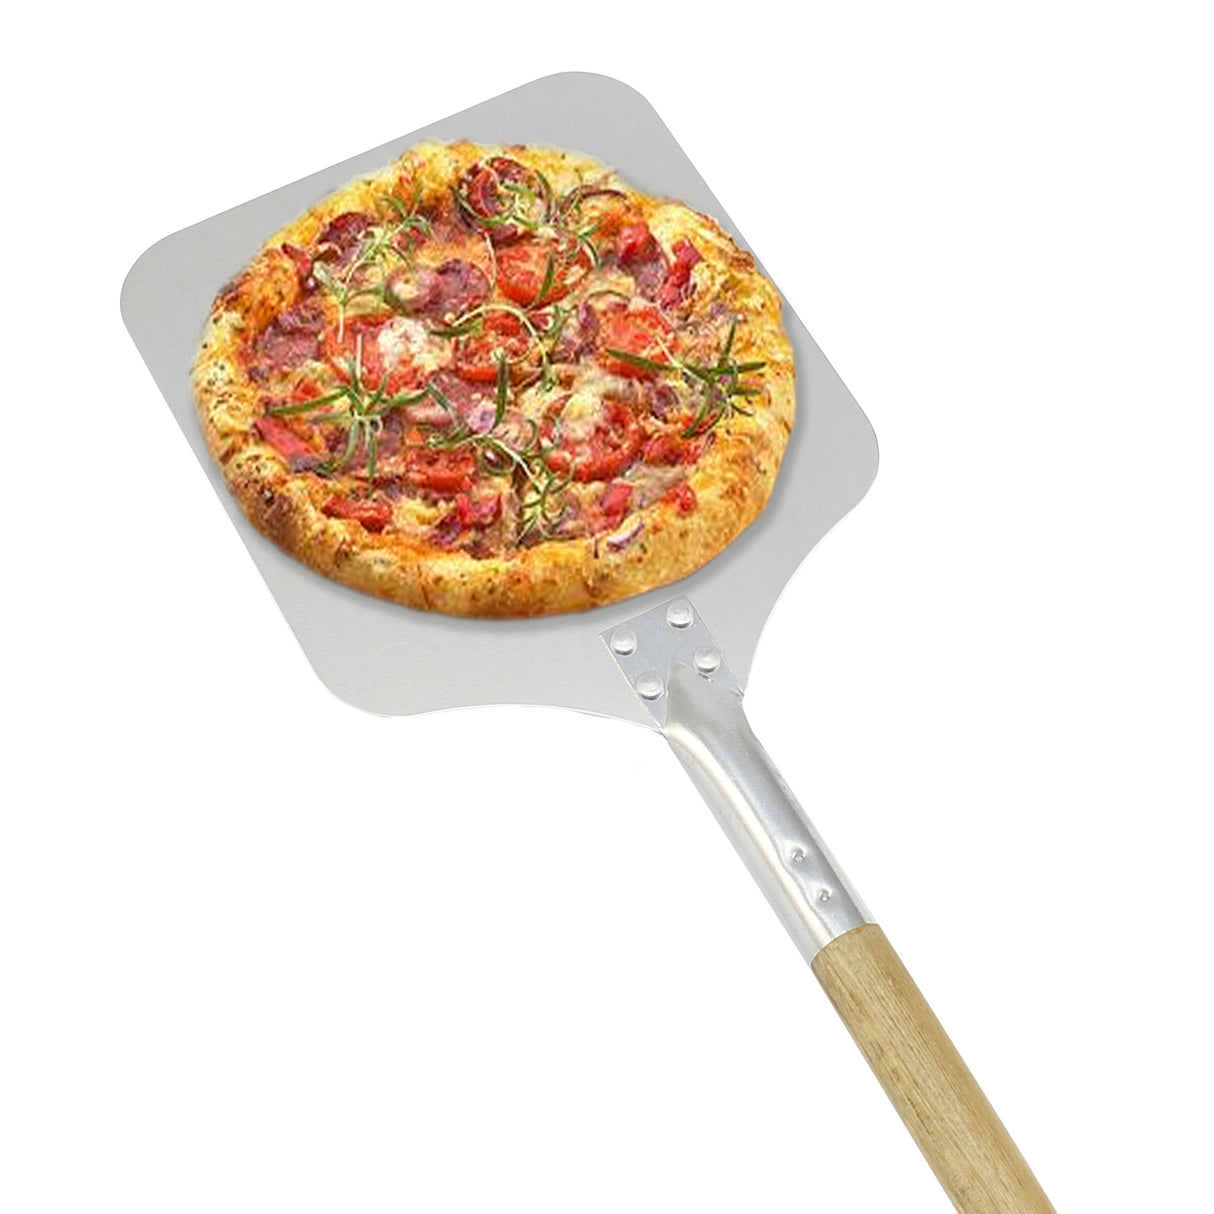 KuKoo Large Commercial Pizza / Baking Oven & Pizza Peel